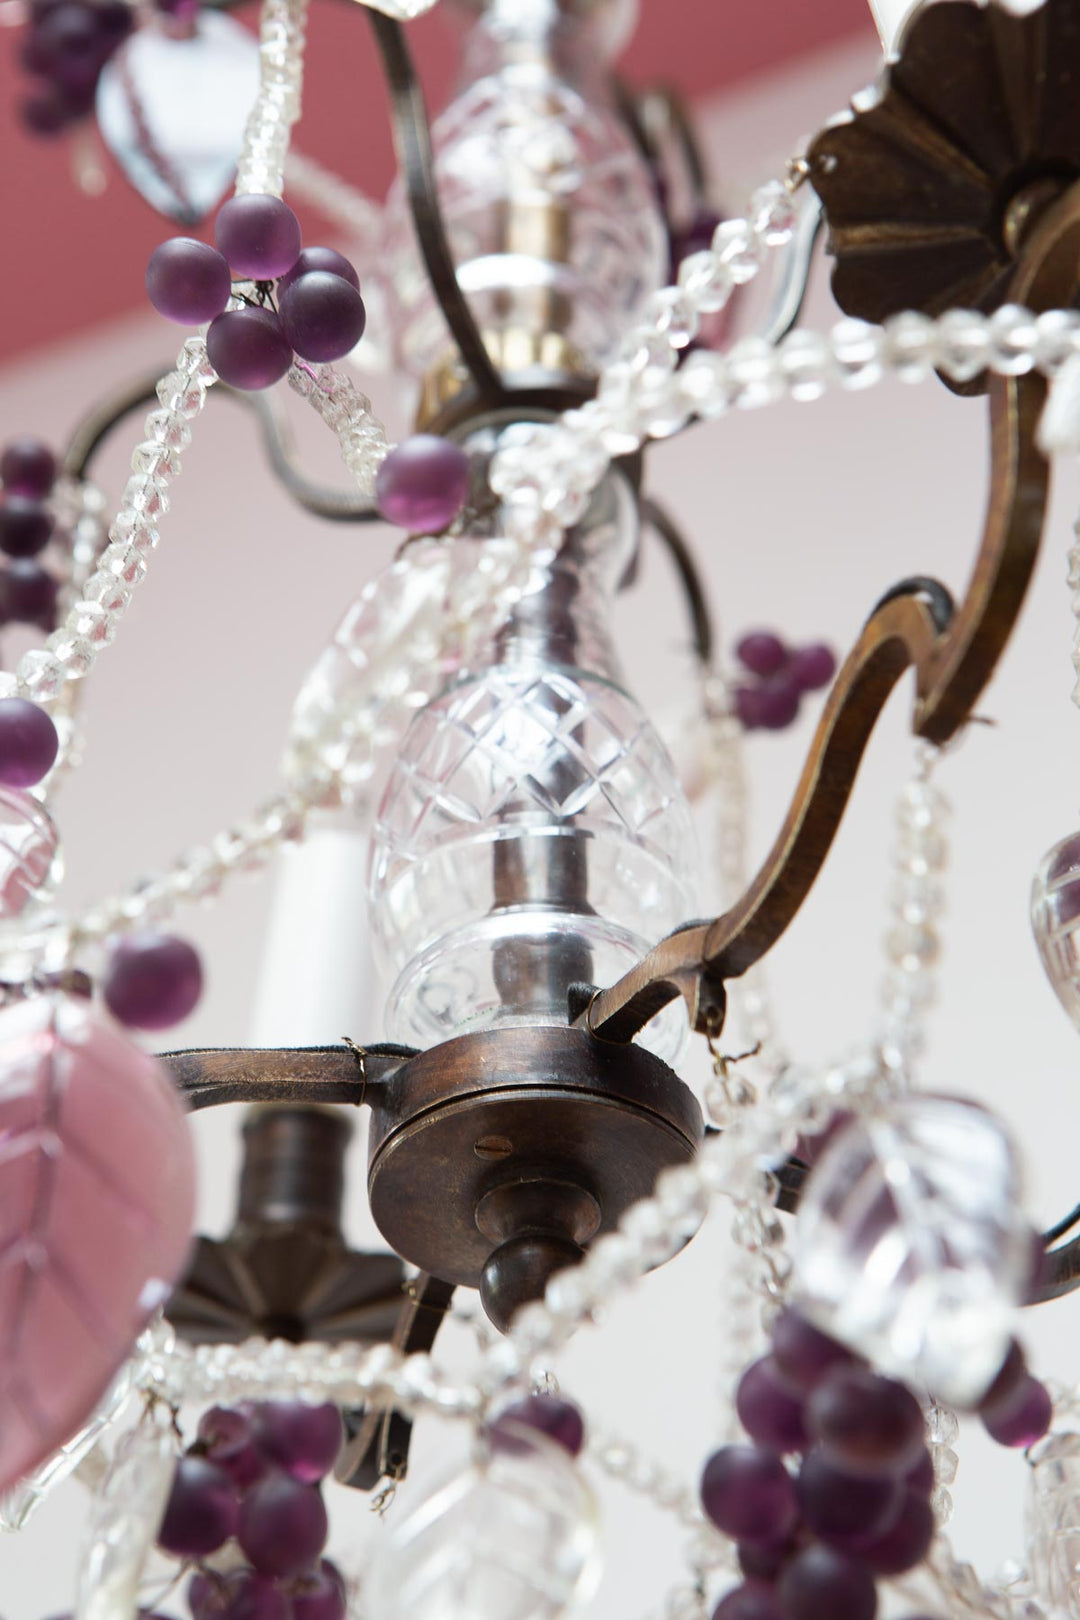 lámpara techo antigua araña francesa cristales gotas antique french chandelier with murano glass drop lustre ancien  vintageandchic